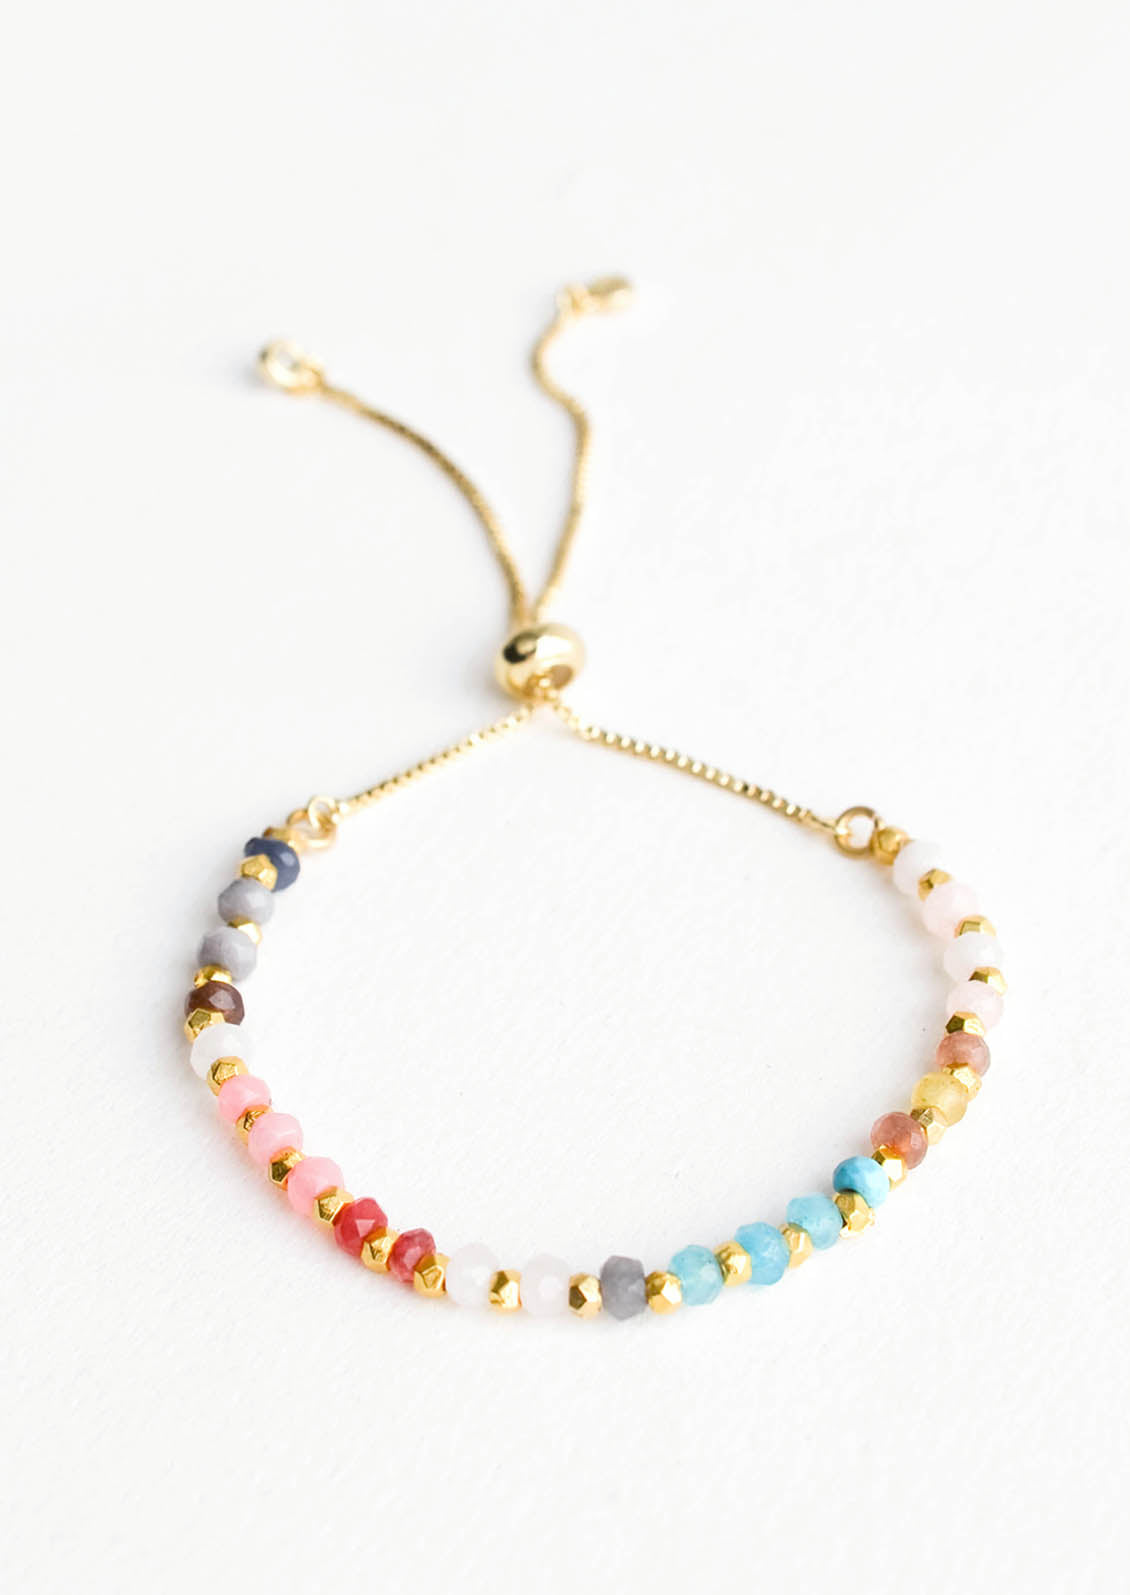 SUNSLL Chromatic Colour Natural Stone Beads Bracelet Elastic Rope